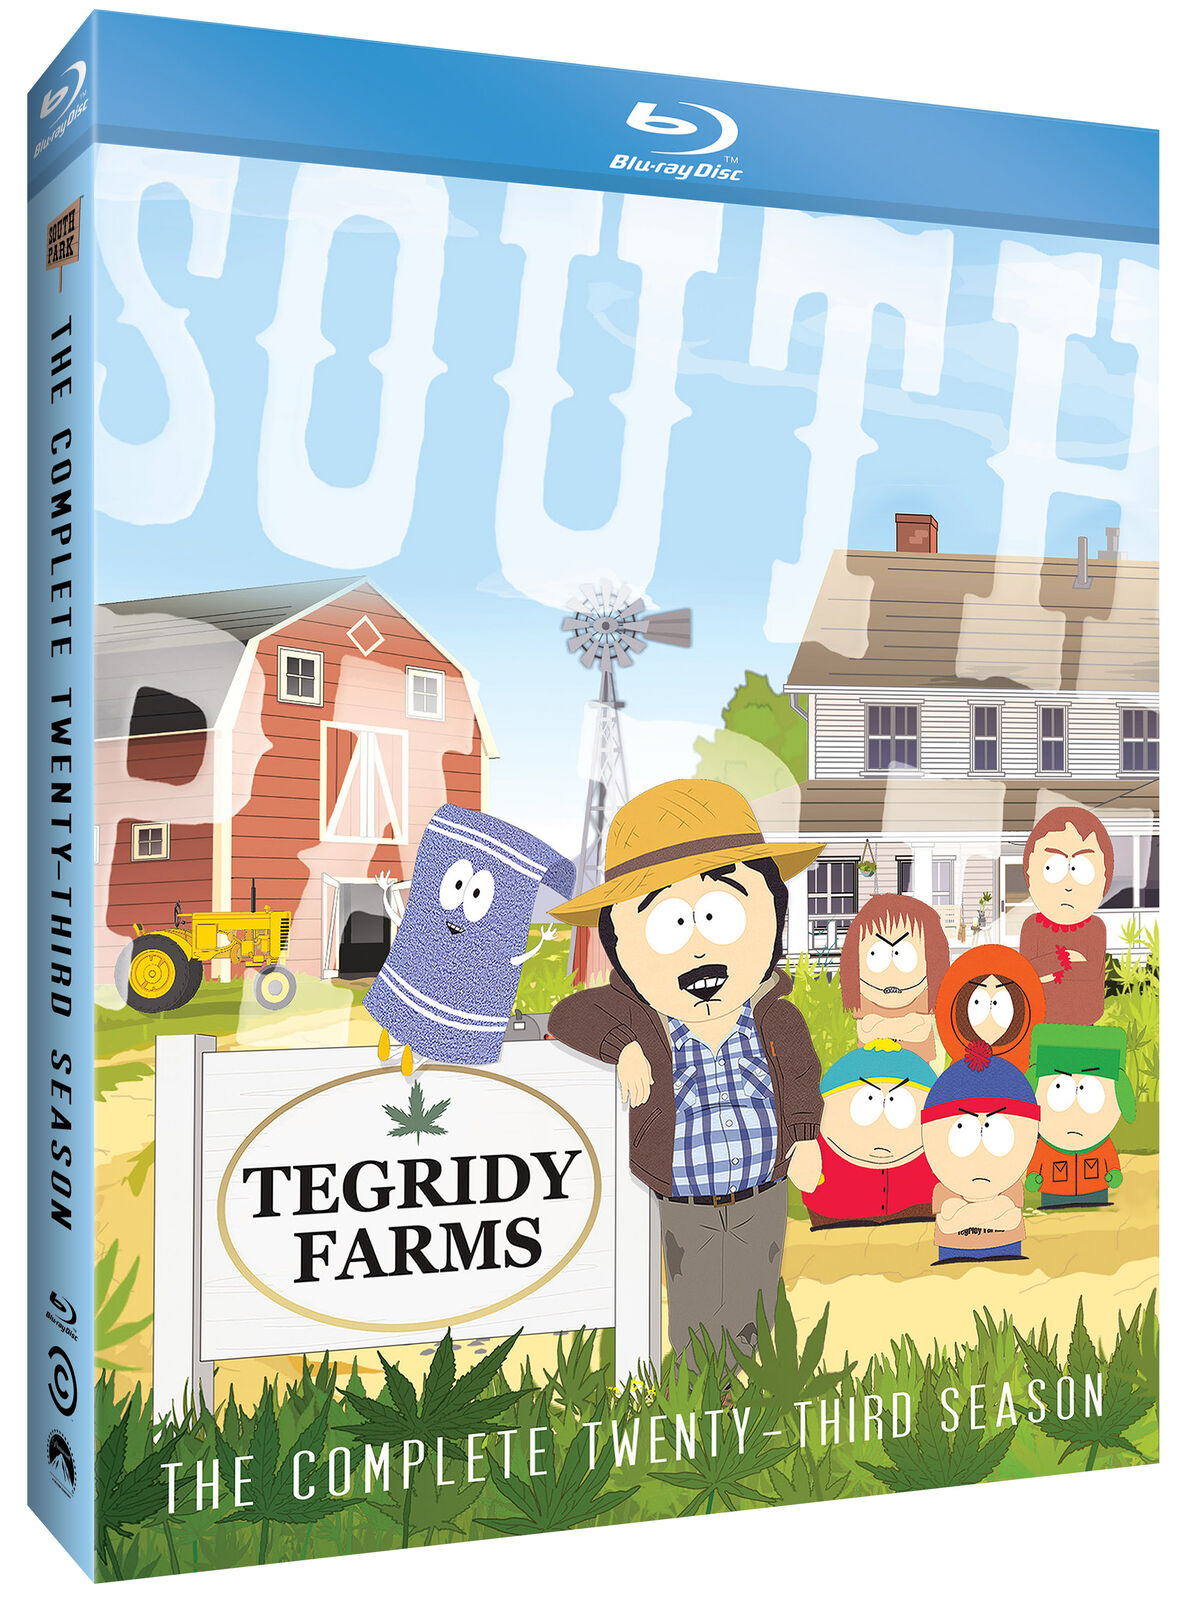 Tegridy Wins with 'South Park: The Complete Twenty-Third Season' on DVD/Blu-ray  | Fandom